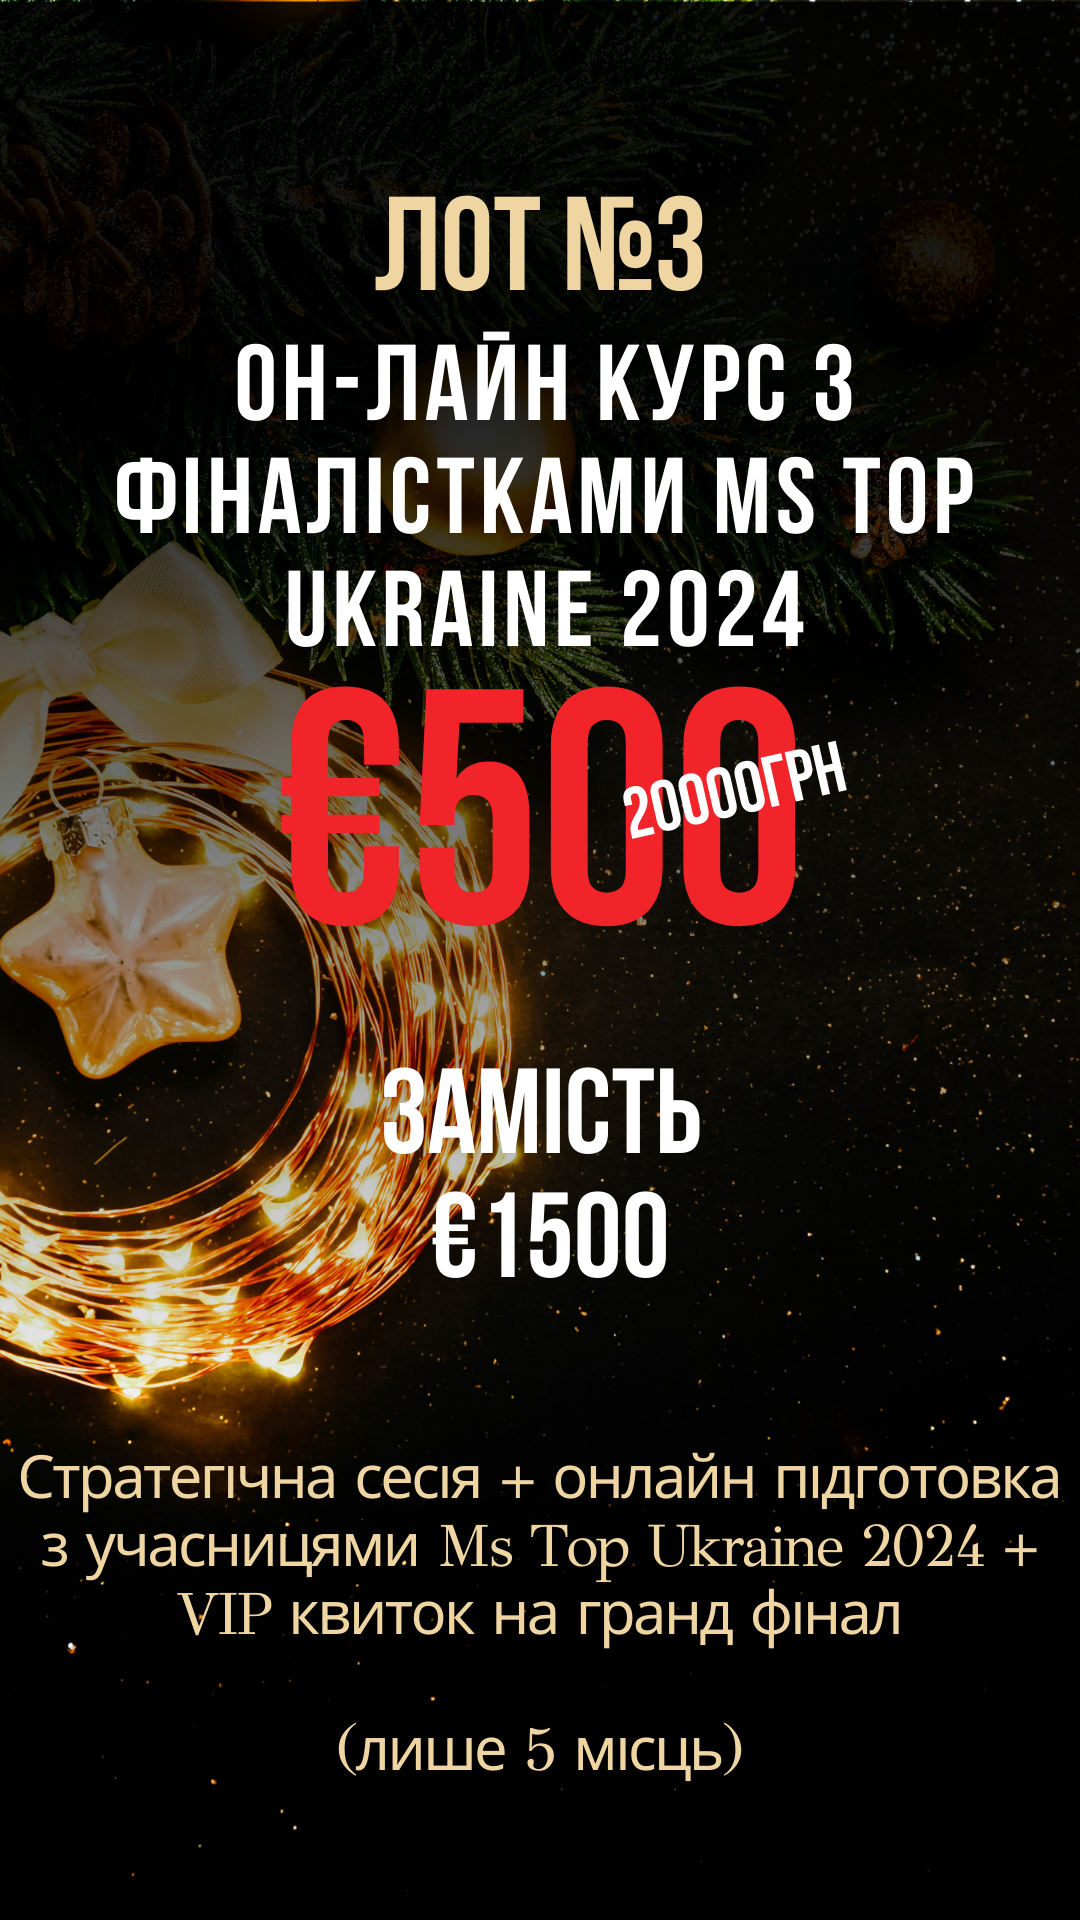 Он-лайн курс з фіналістками Ms Top Ukraine 2024